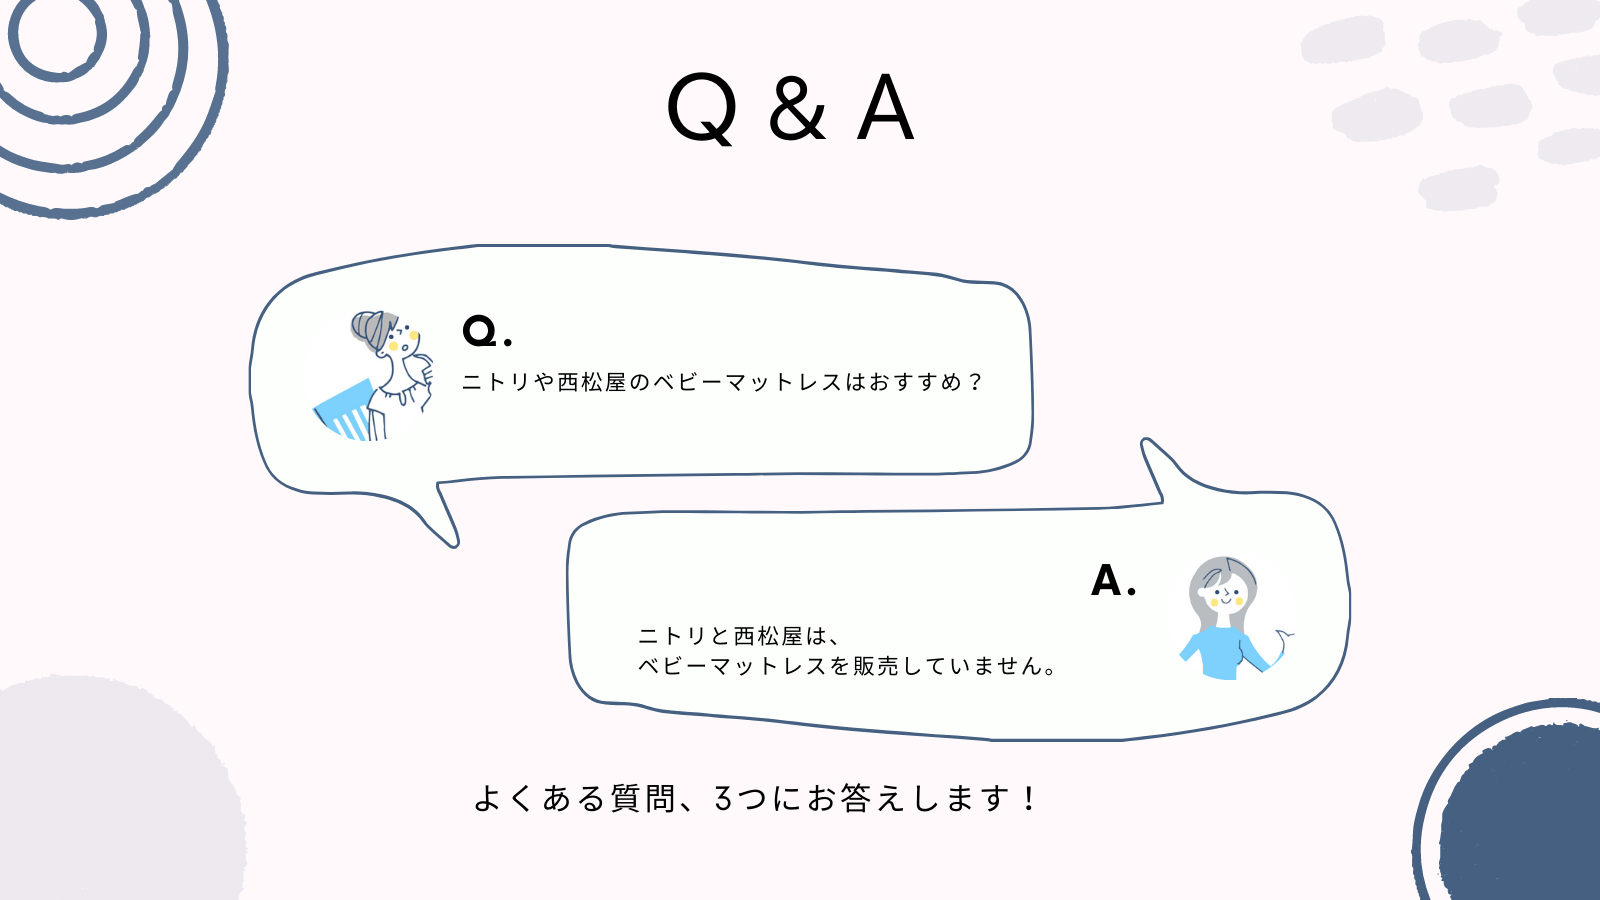 Q & A